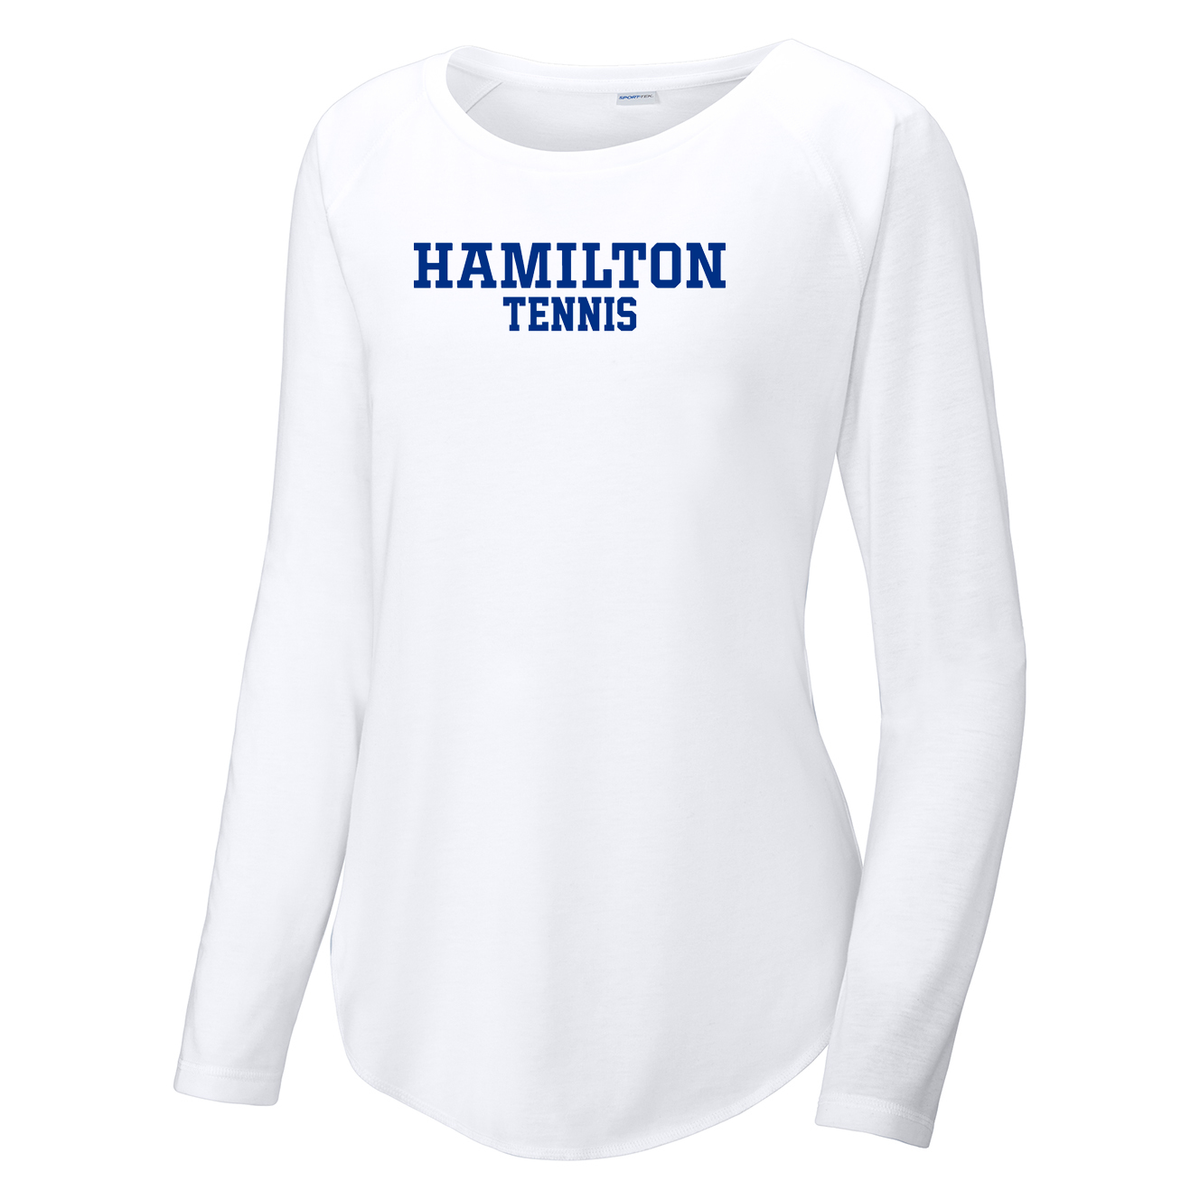 Hamilton College Tennis Women's Raglan Long Sleeve CottonTouch